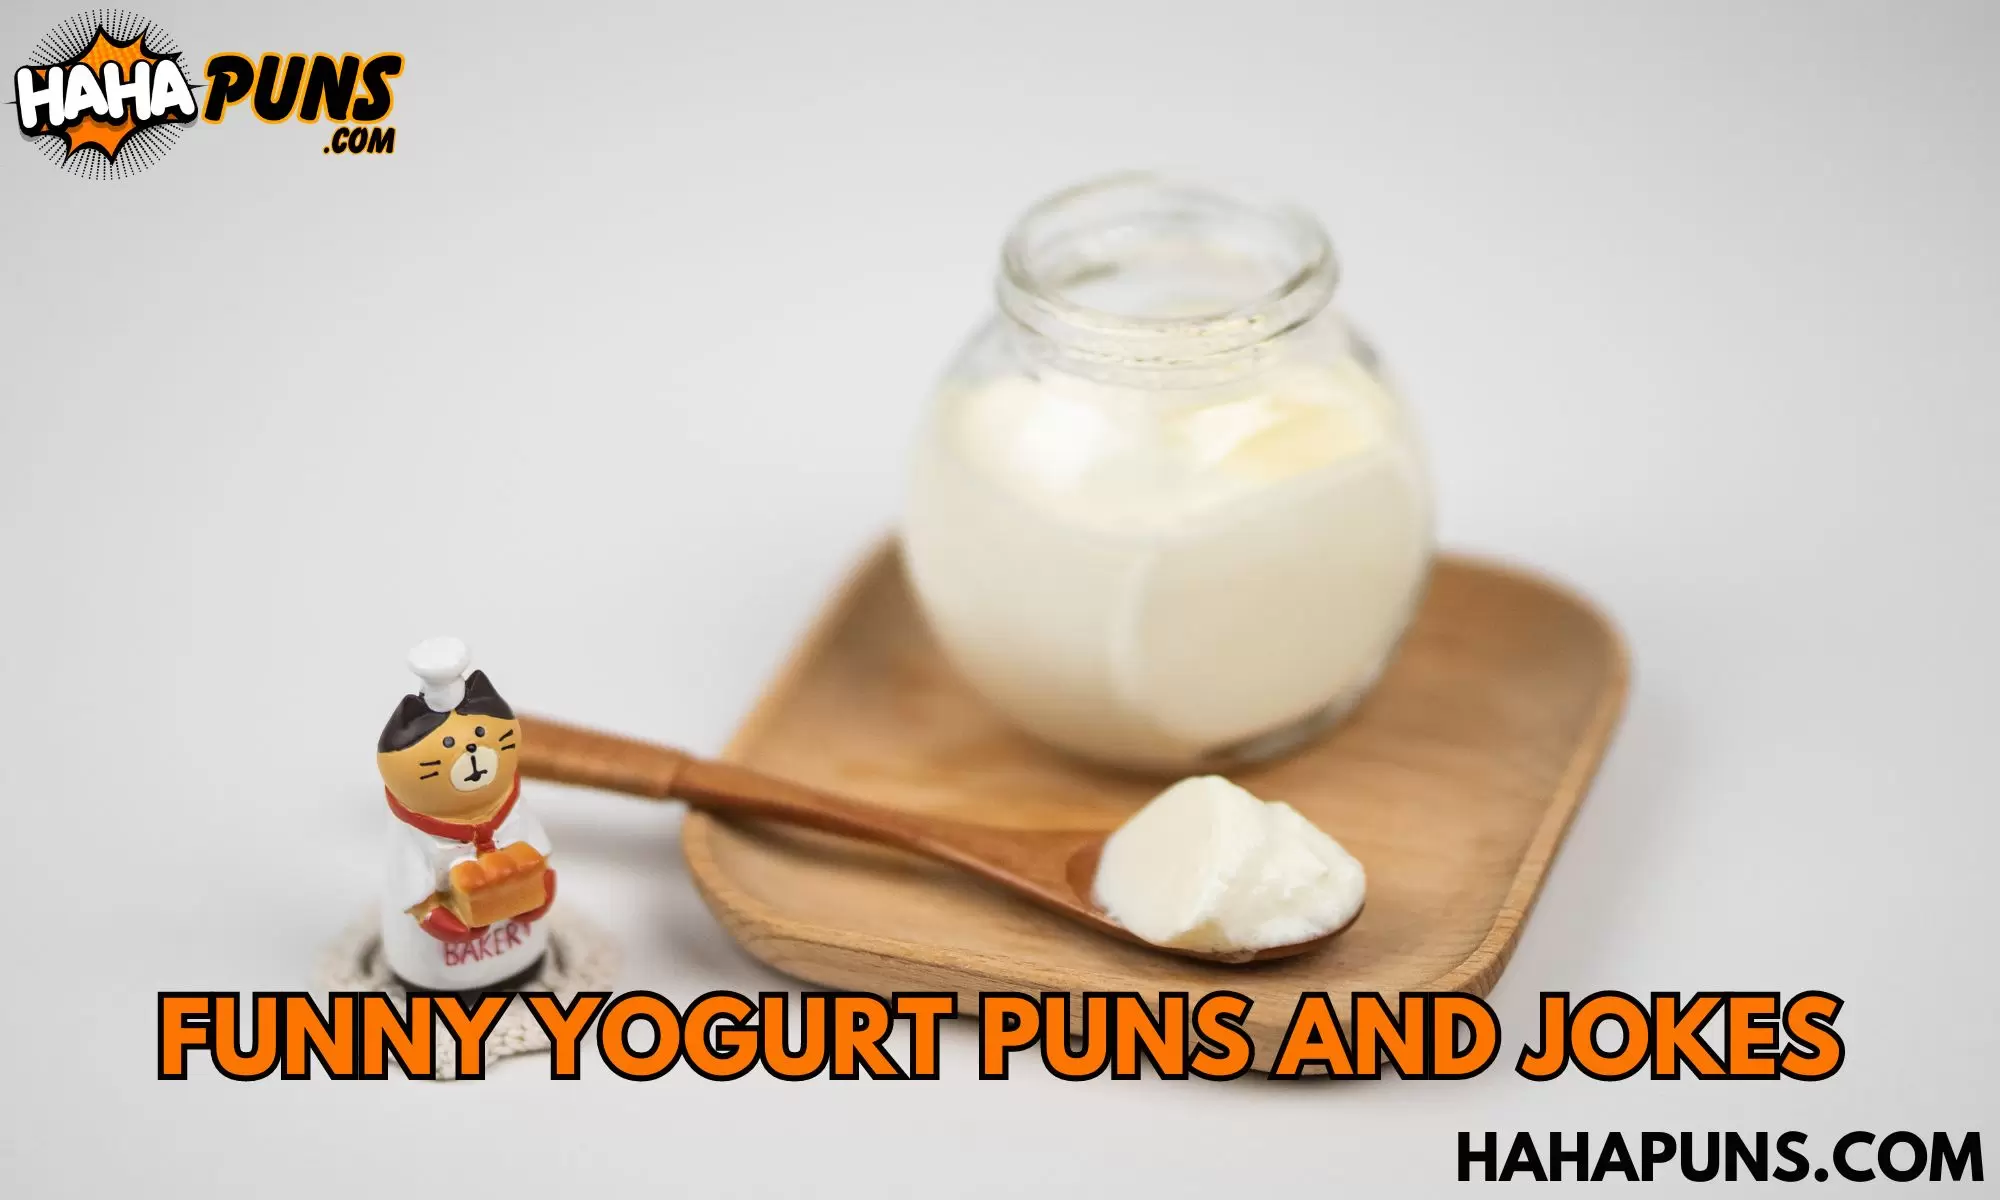 Funny Yogurt Puns and Jokes